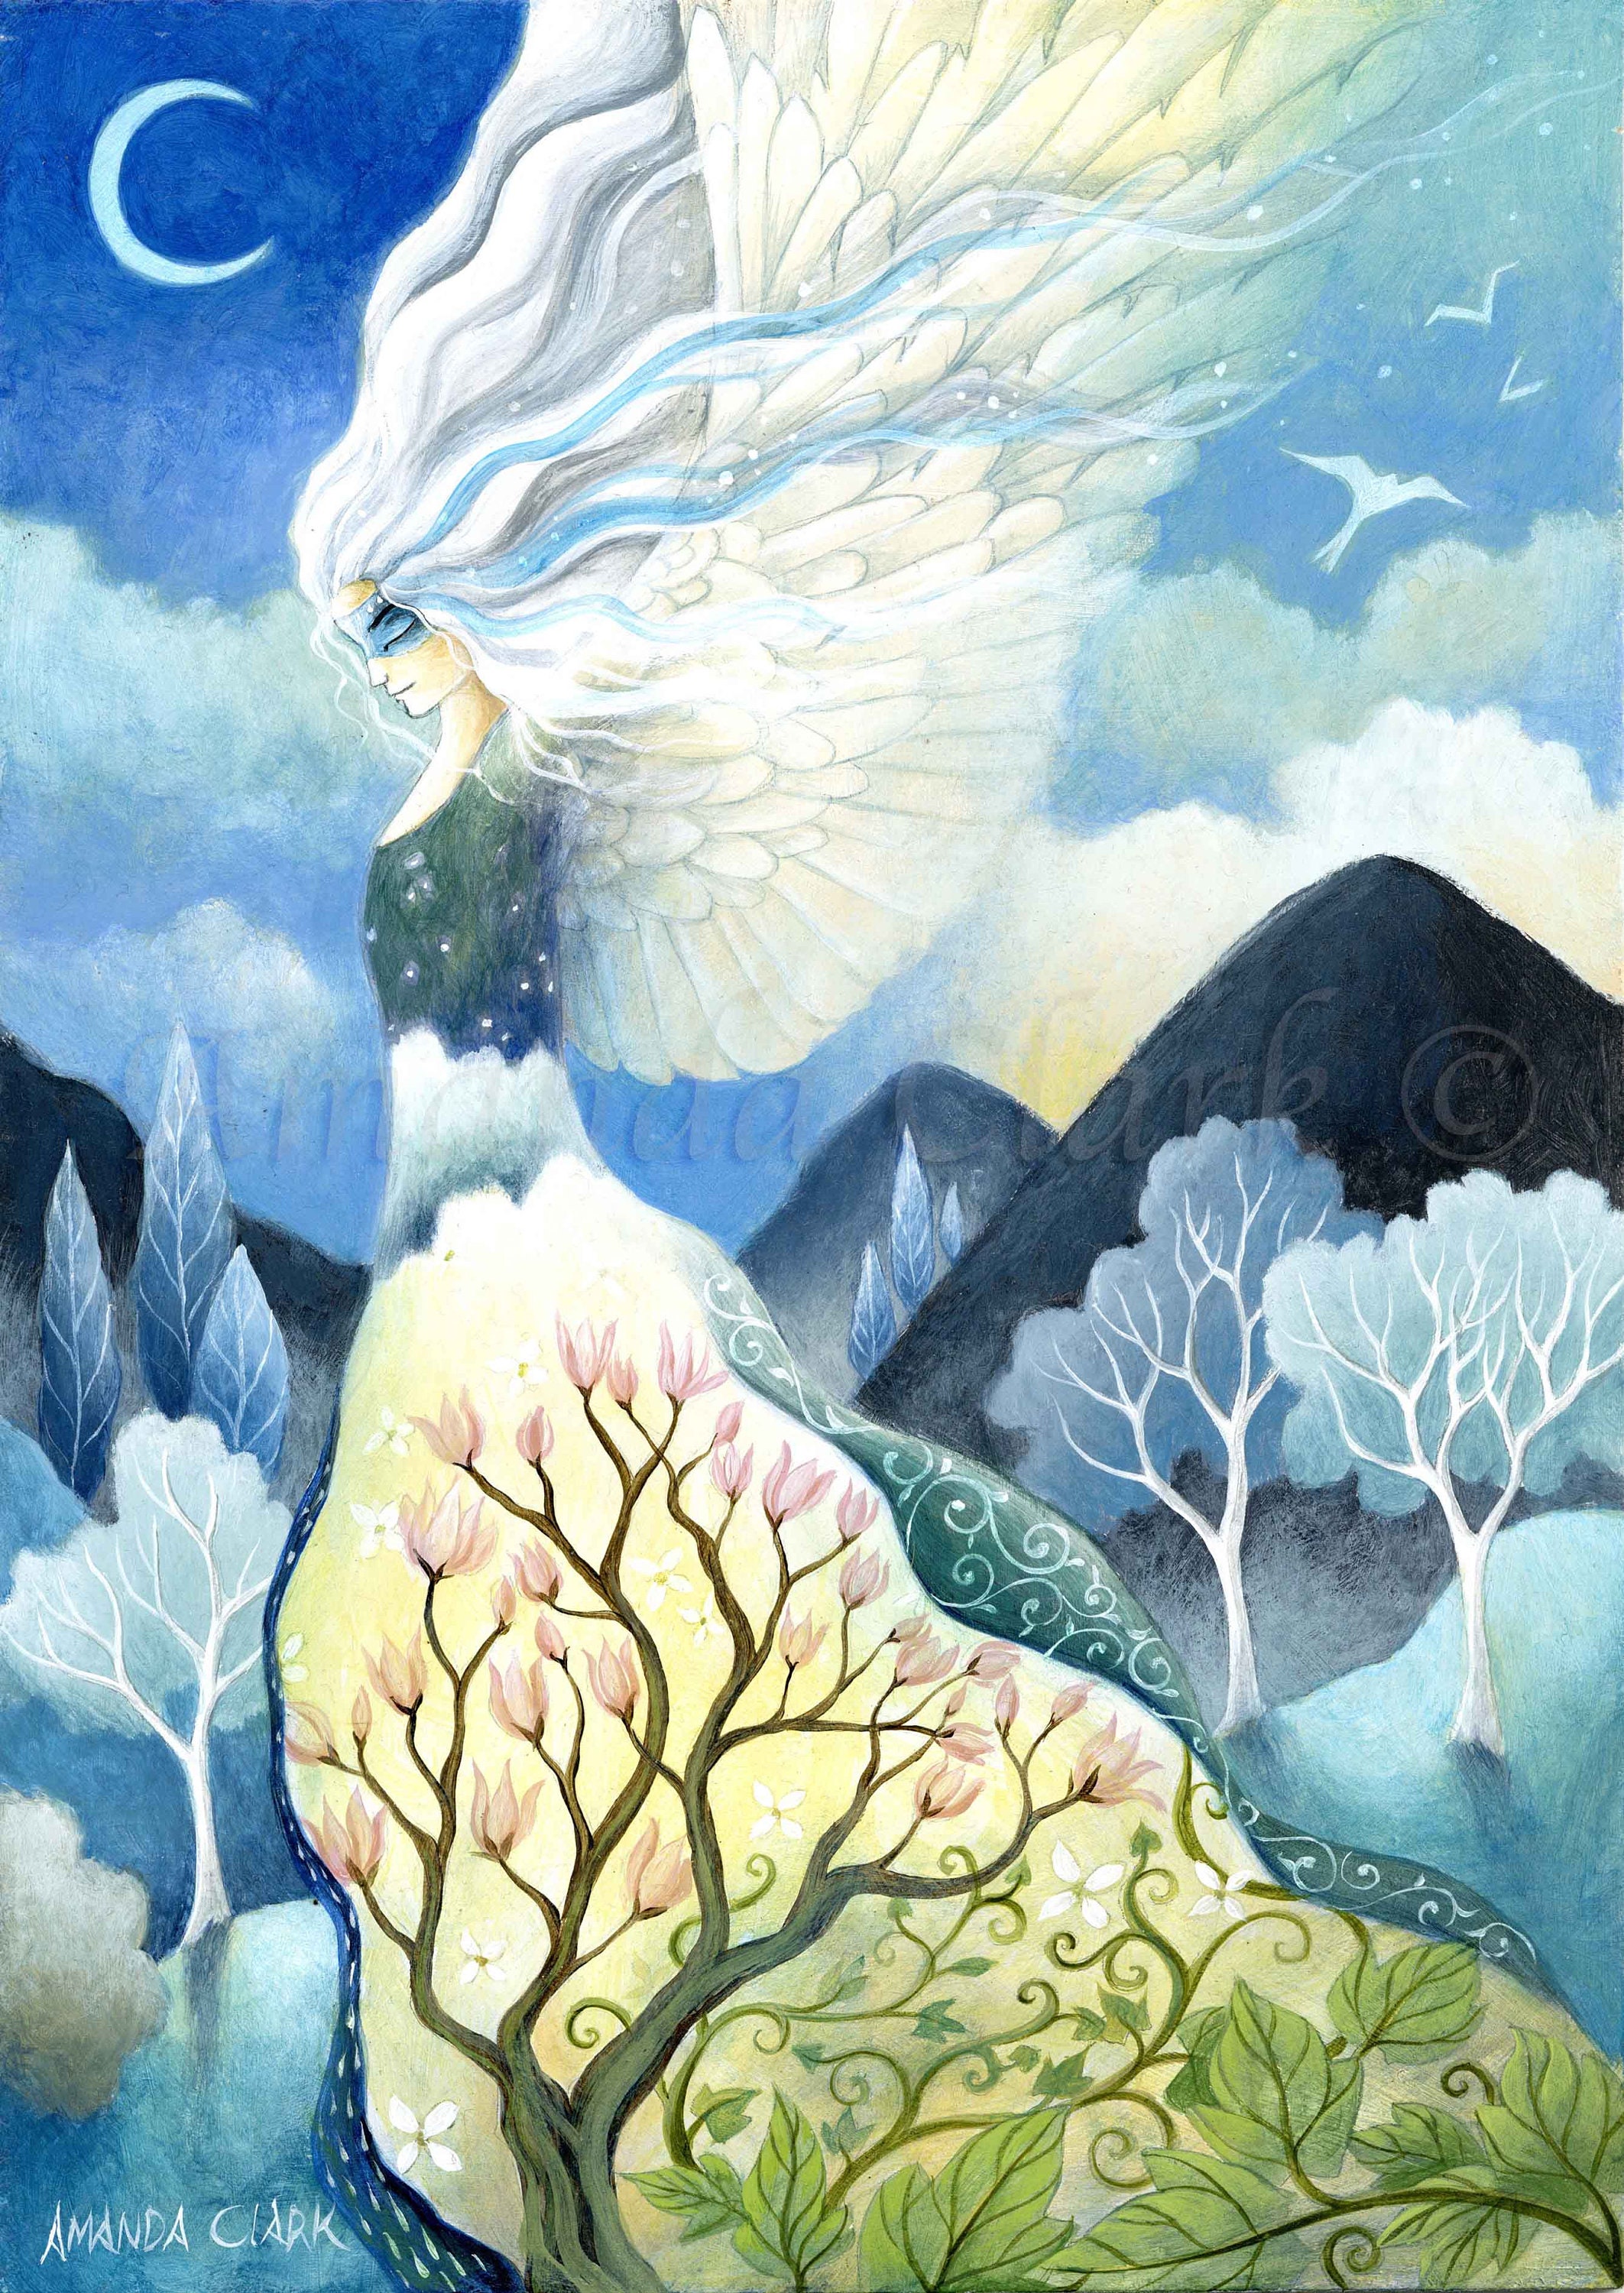 Print titled 'Eriel' by Amanda Clark fairytale art | Etsy